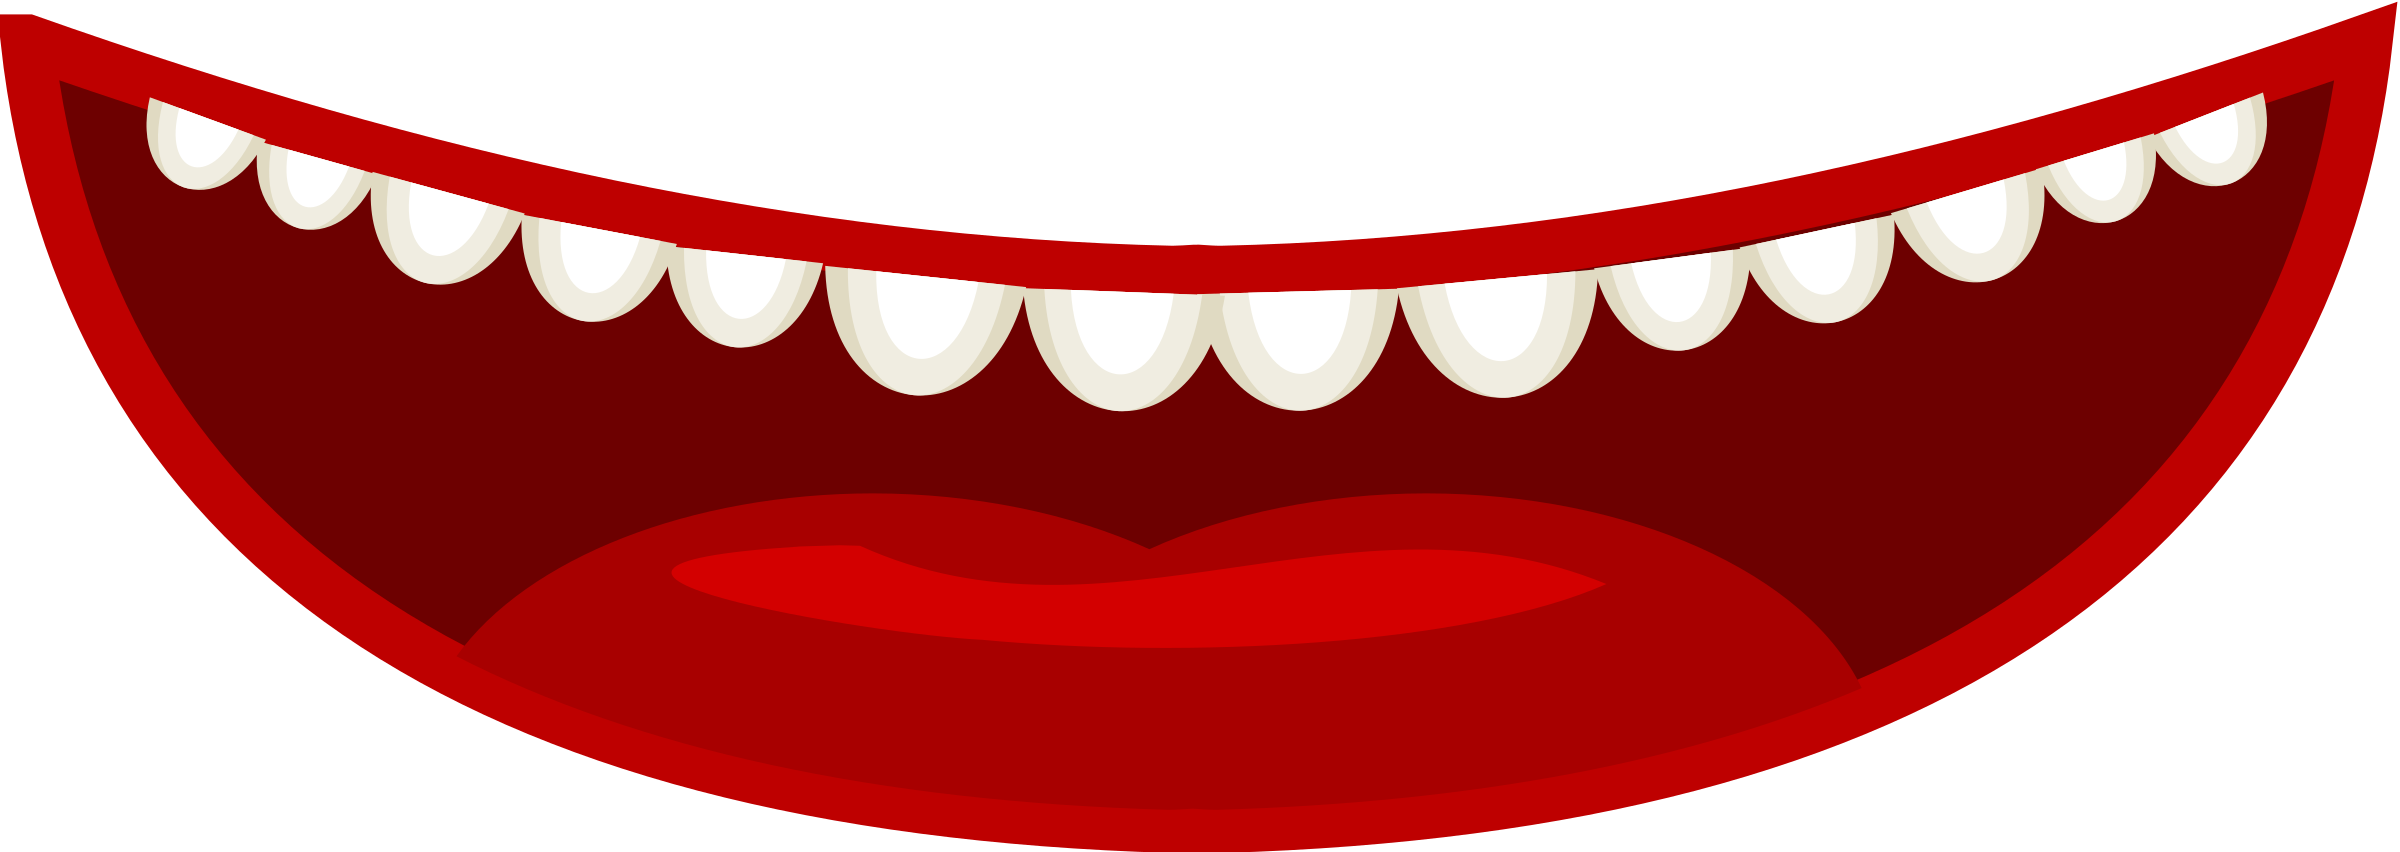 Mouth Smile Transparent Image